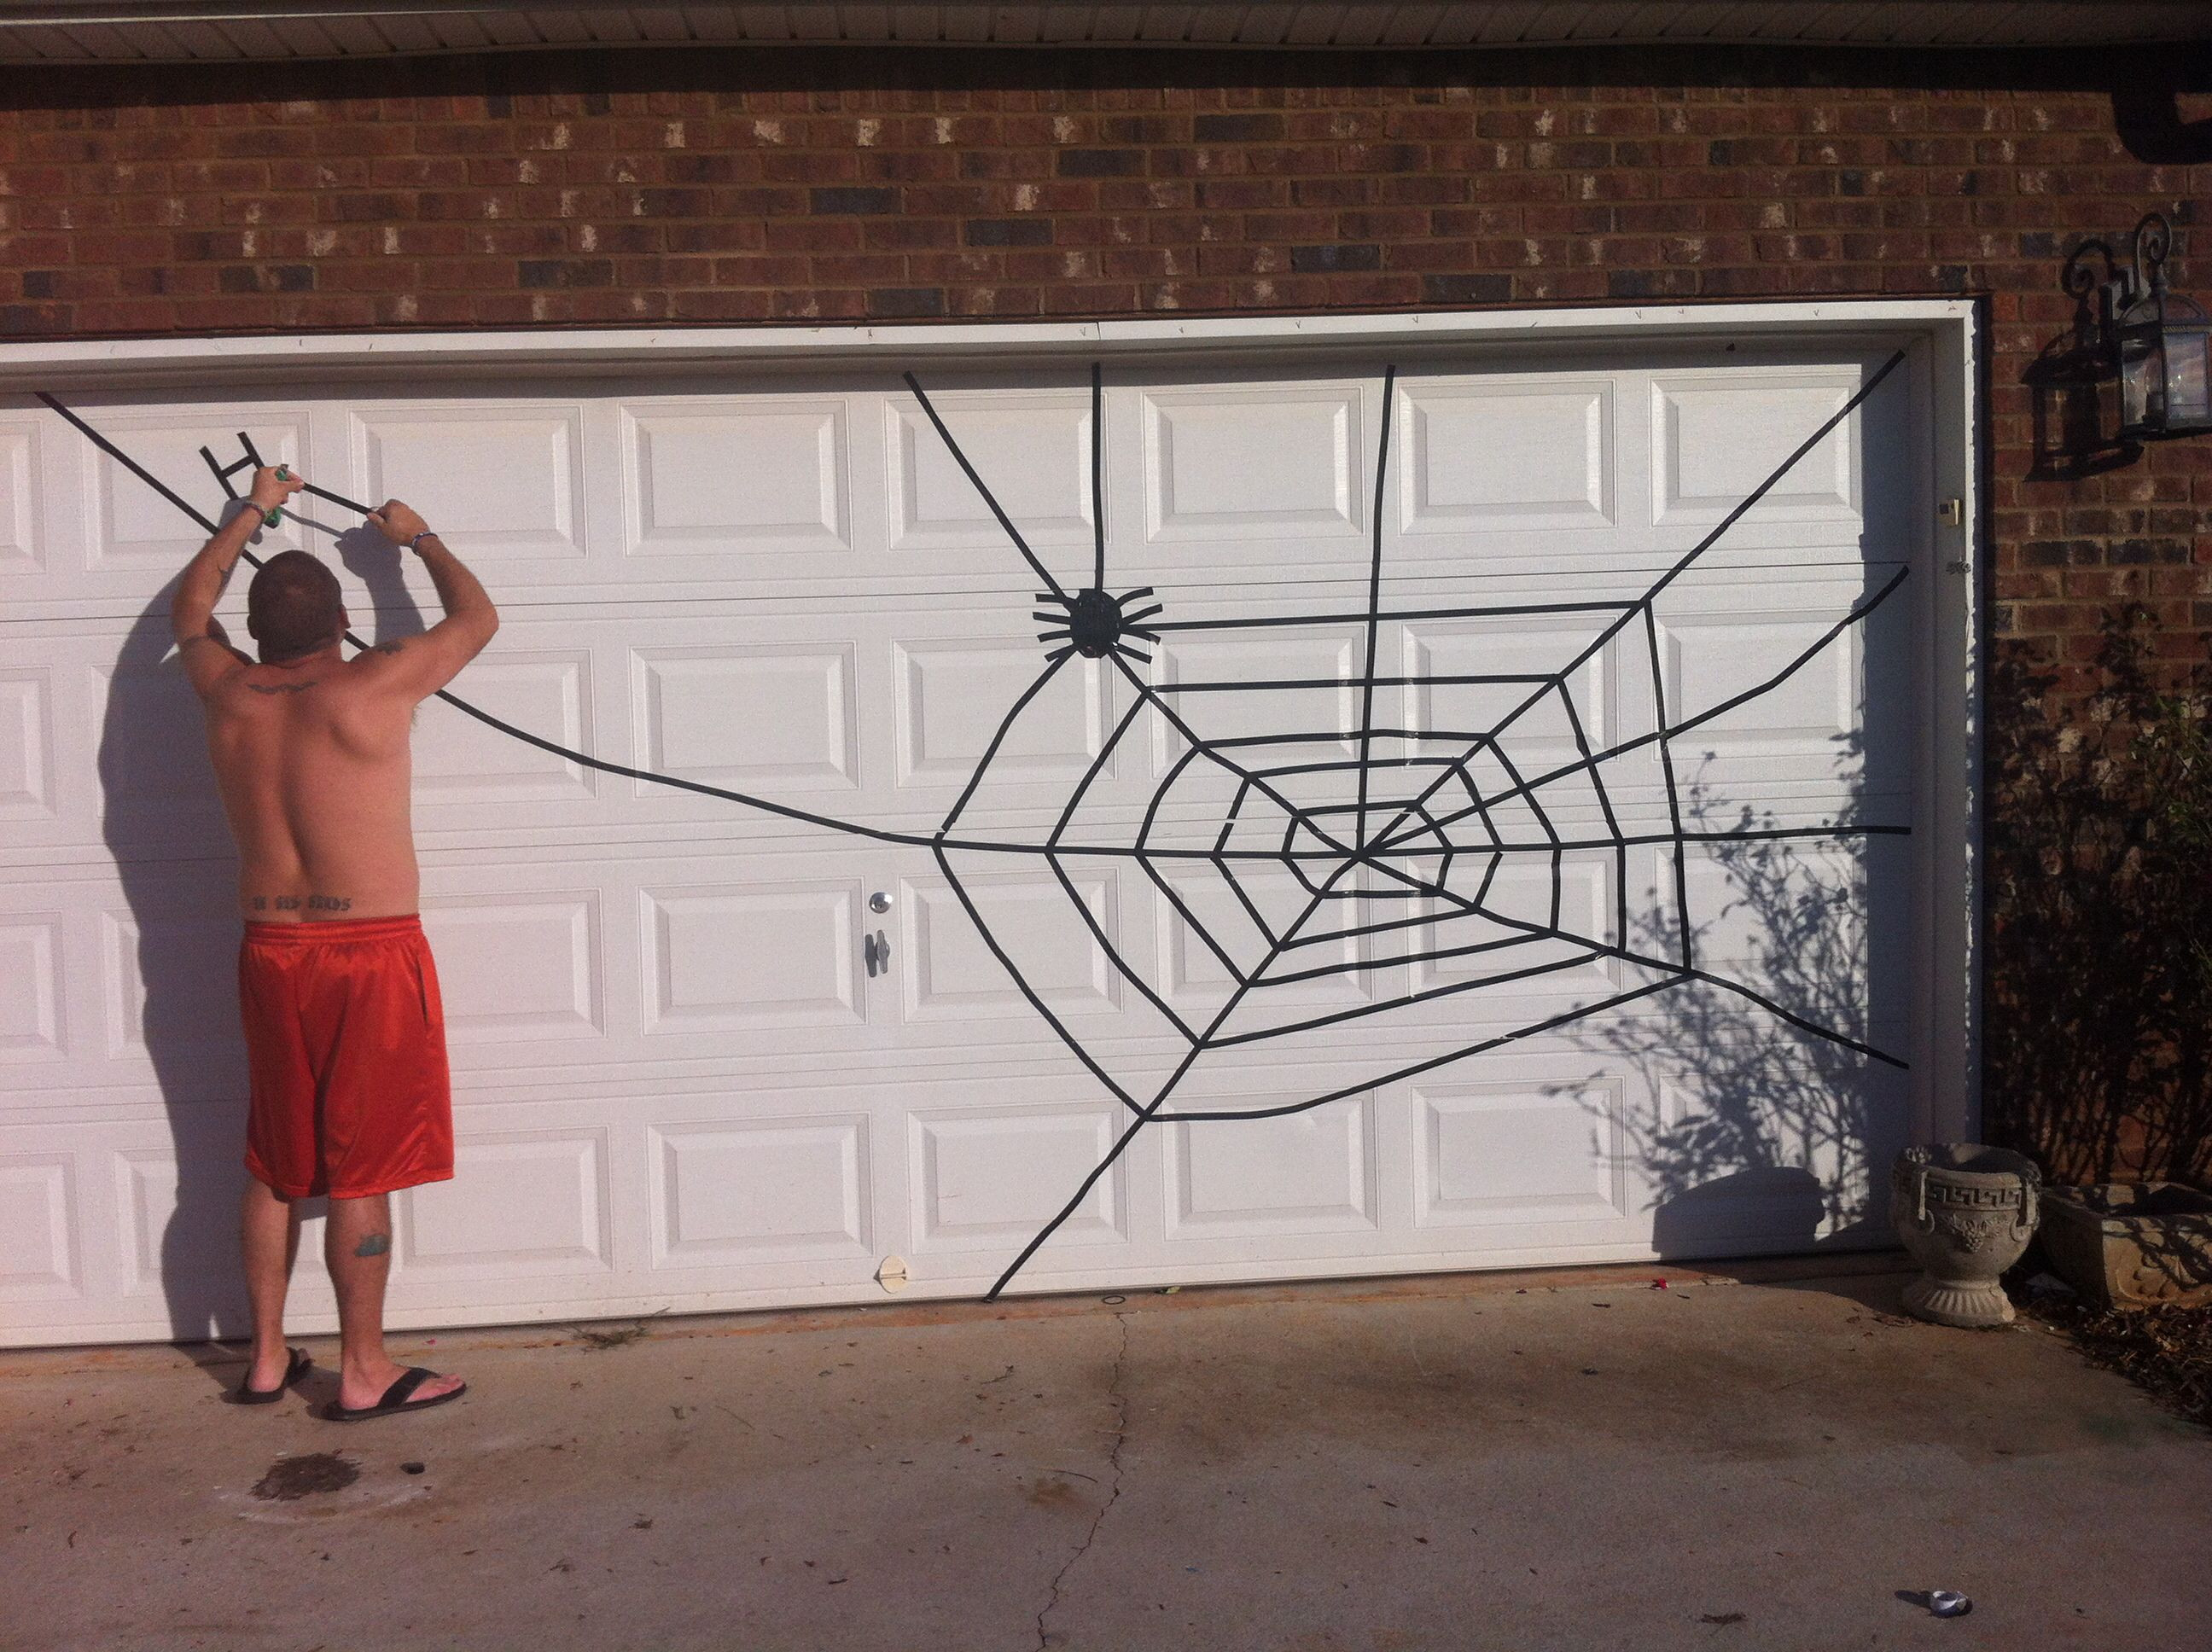 Garage Door Halloween Decoration
 Spider web for Halloween Garage Door Use electrical tape